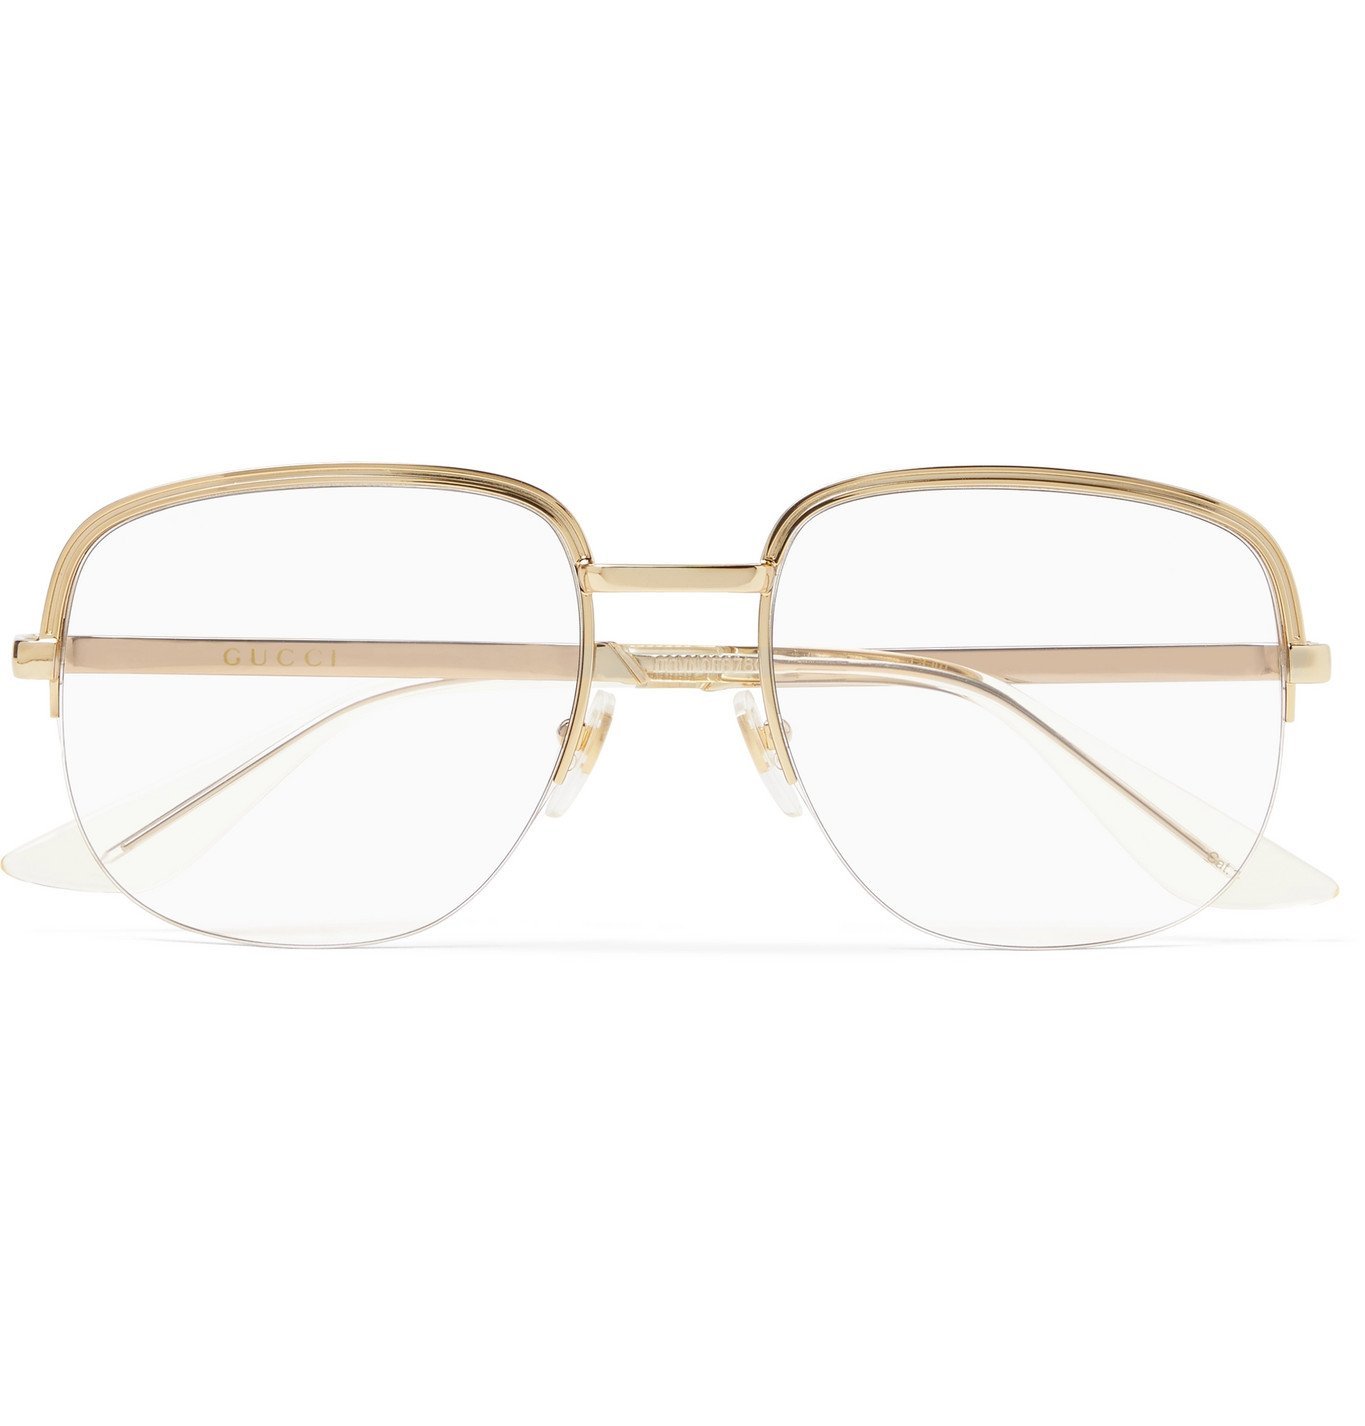 gucci square eyeglasses